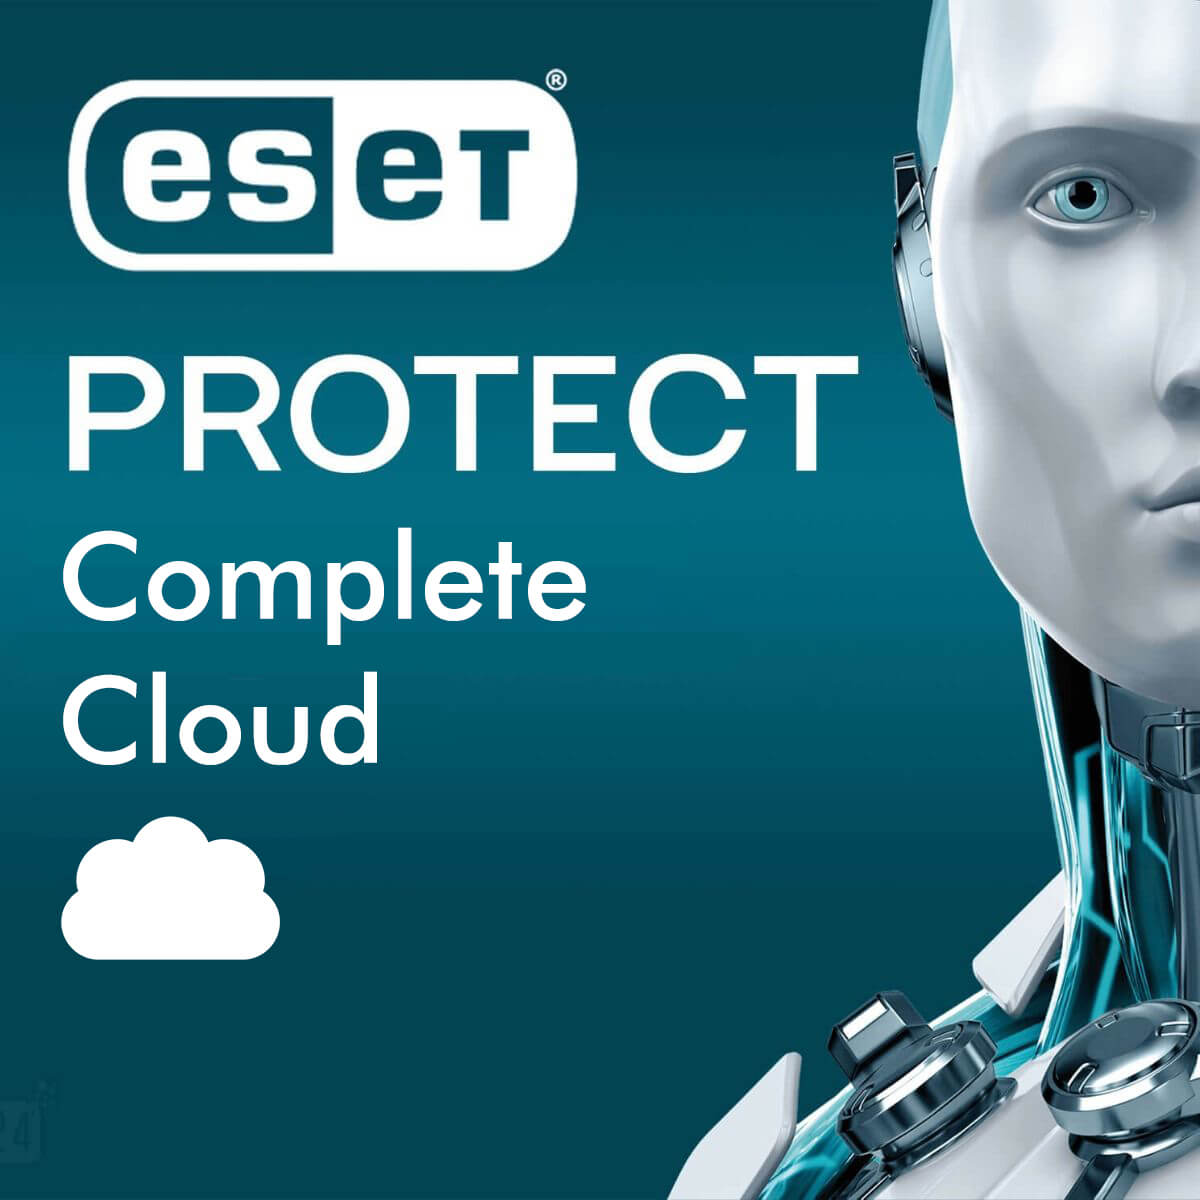 ESET Protect Complete Cloud (Academic/ Non-Profit/ Gov) 1-Year Subscription License